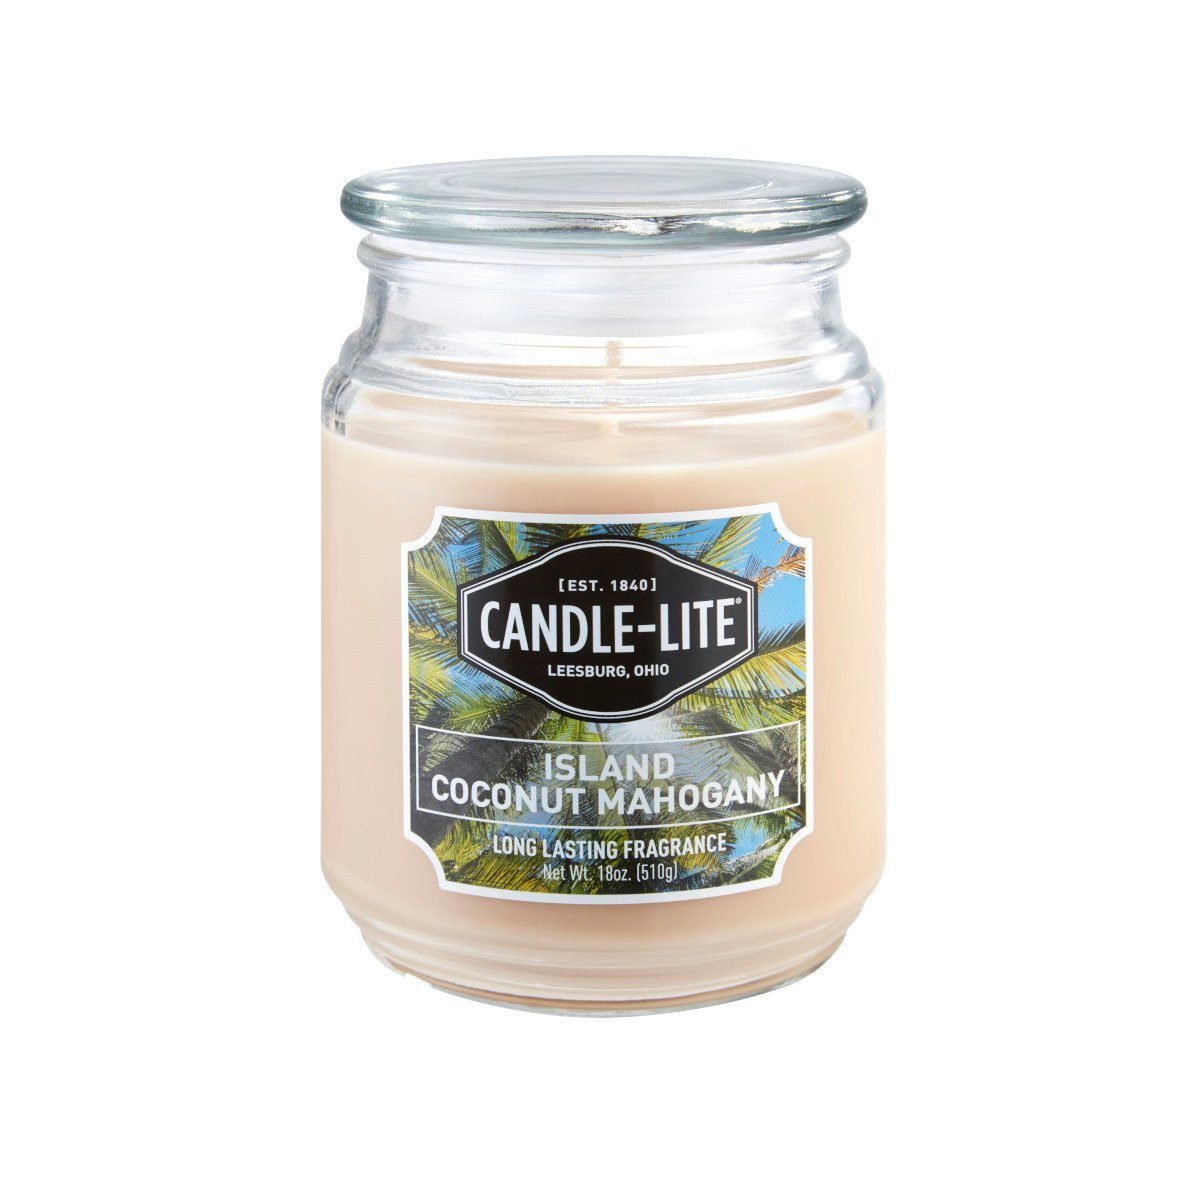 Candle-lite™ Duftkerze Duftkerze Island Coconut Mahogany - 510g (Einzelartikel)